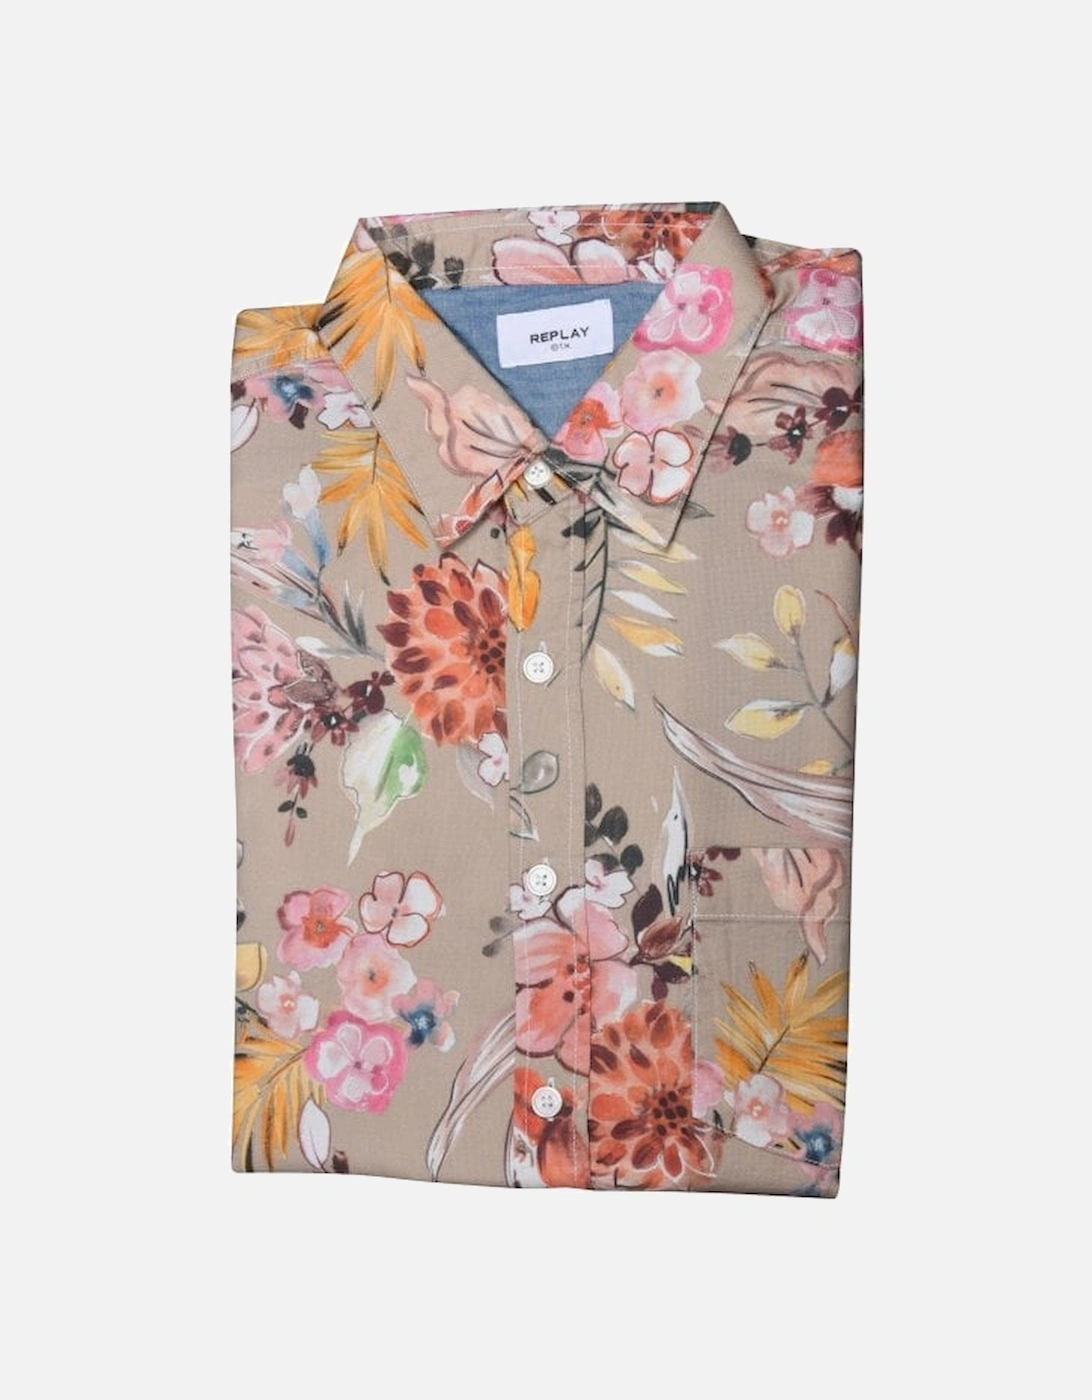 Floral Print Shirt, Fawn/multi